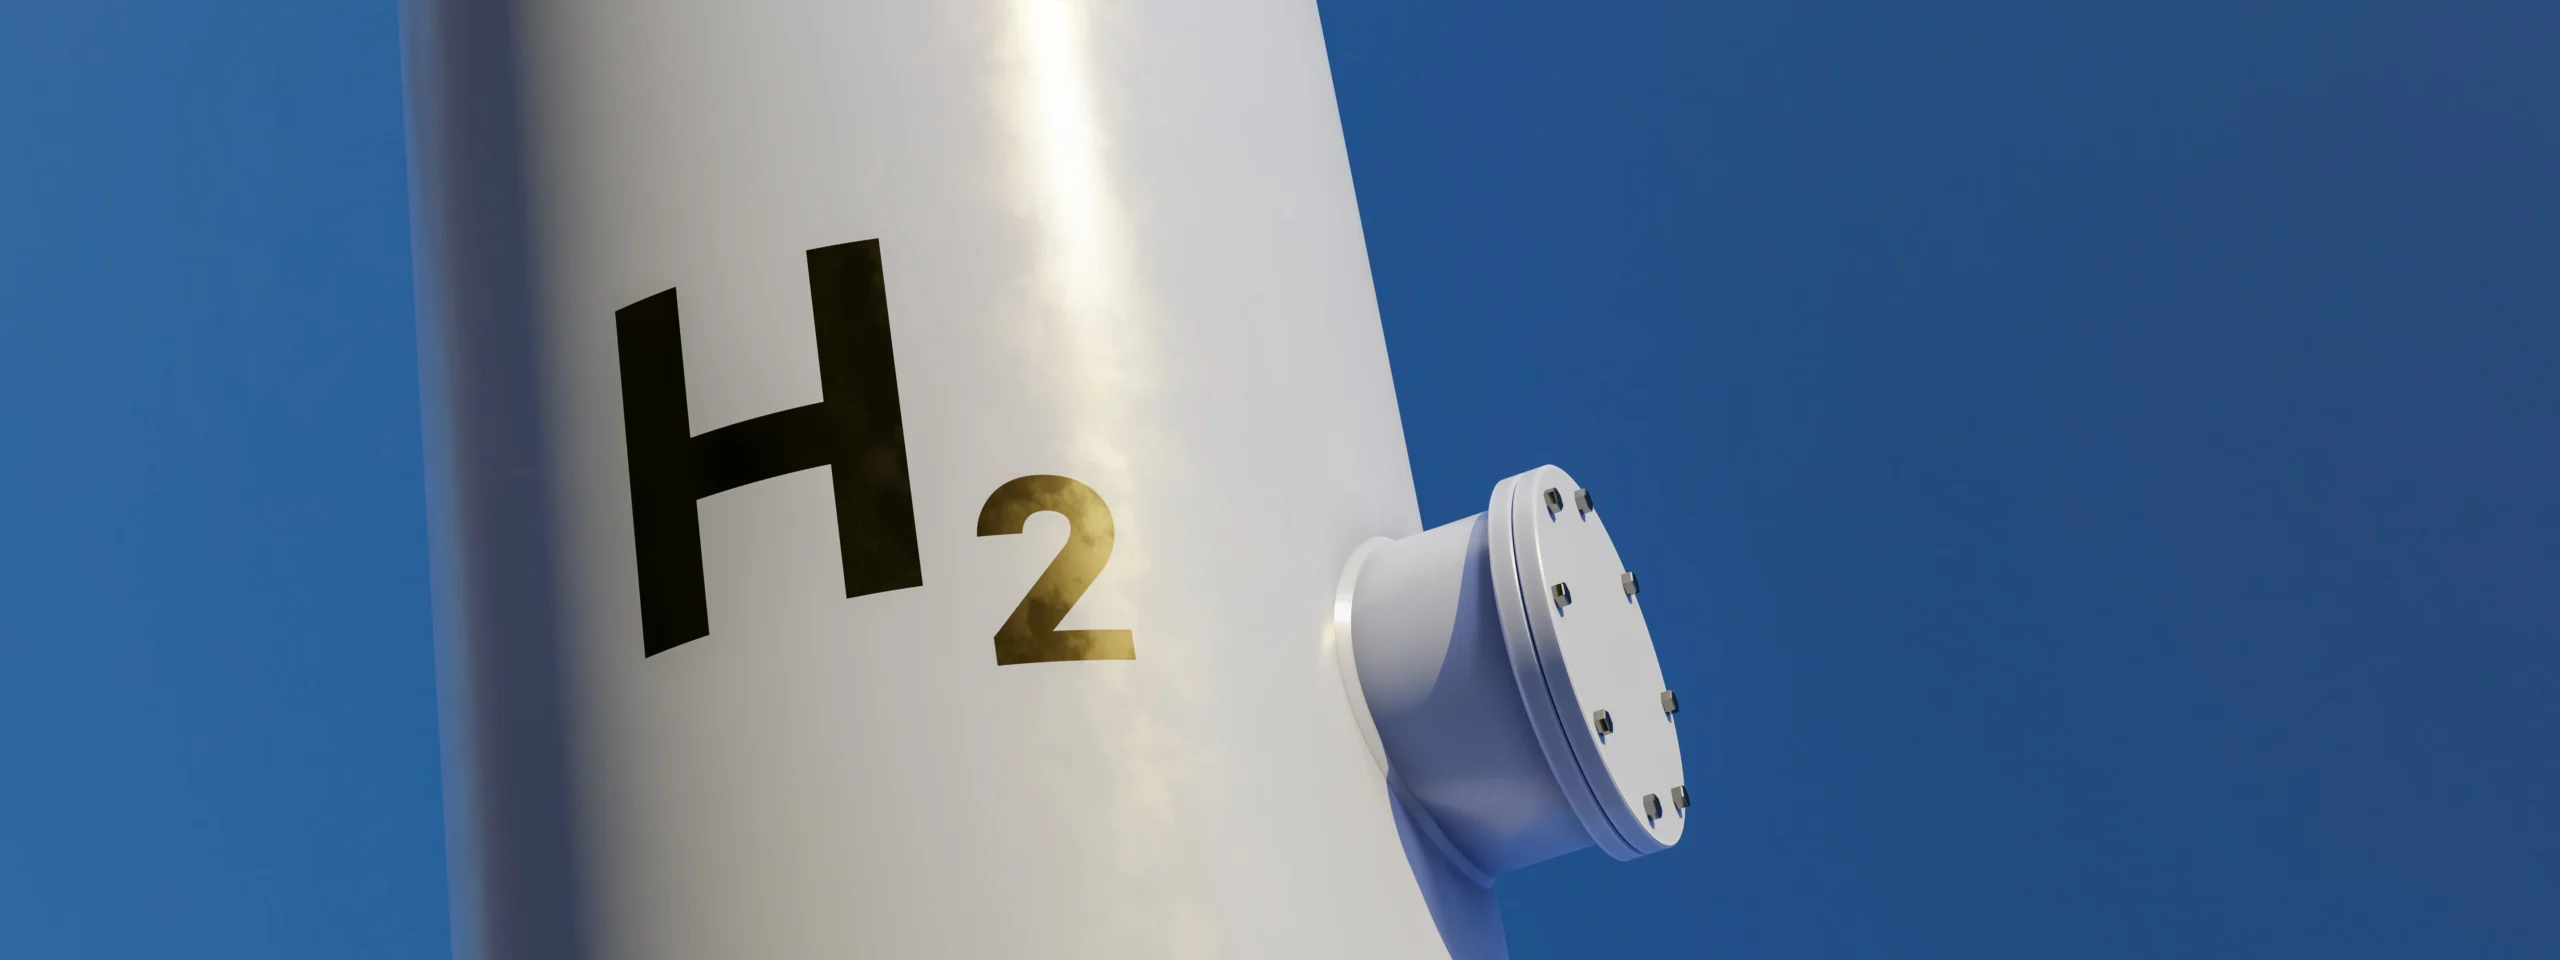 $147 million funding secured for Australian hydrogen hubs